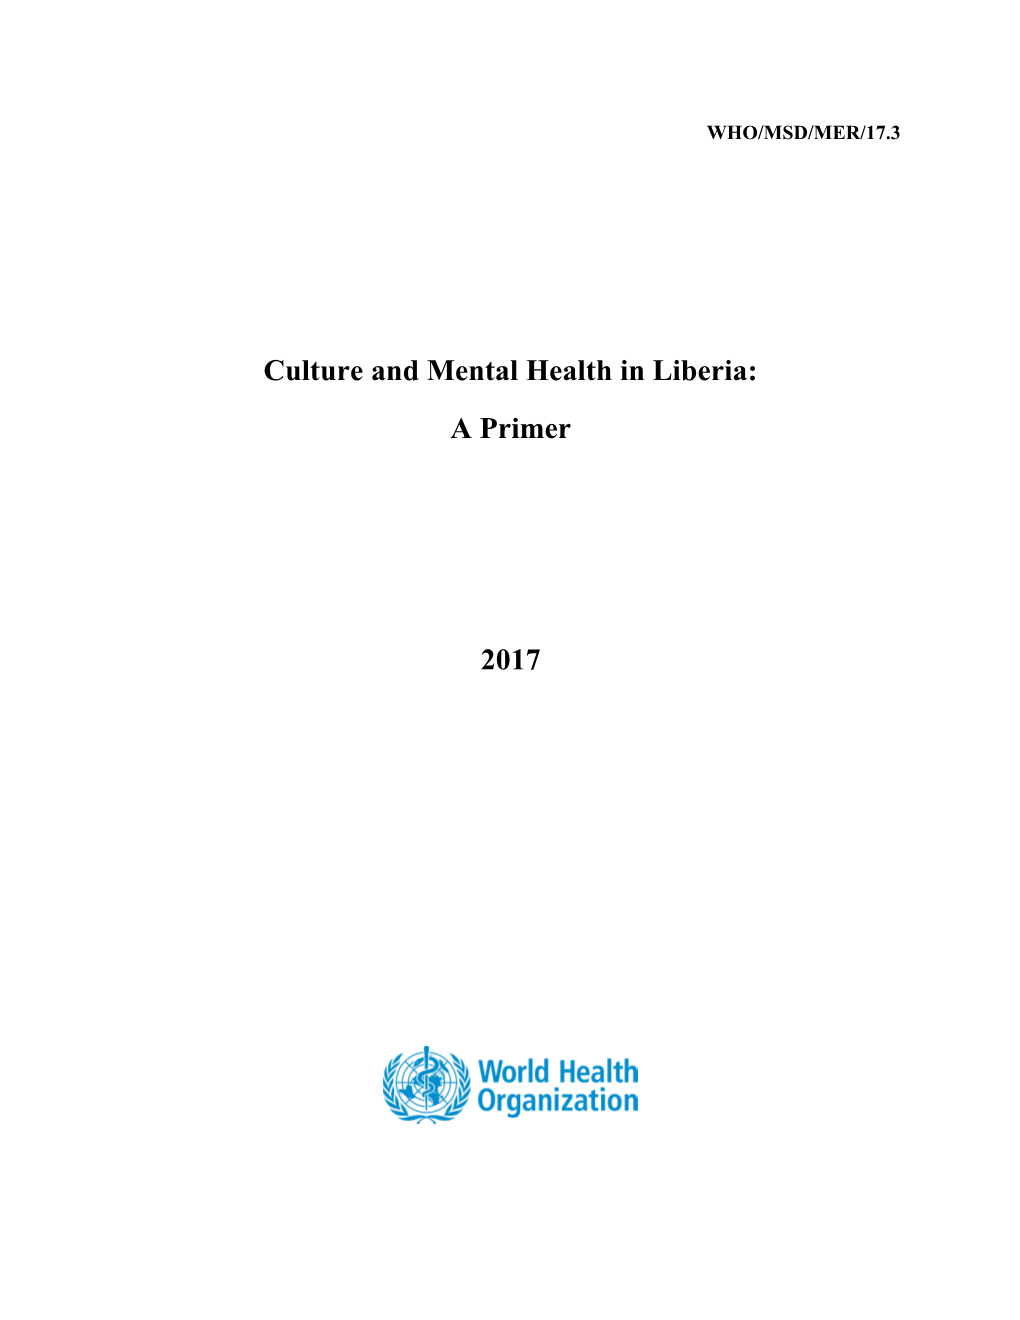 Culture and Mental Health in Liberia: a Primer 2017